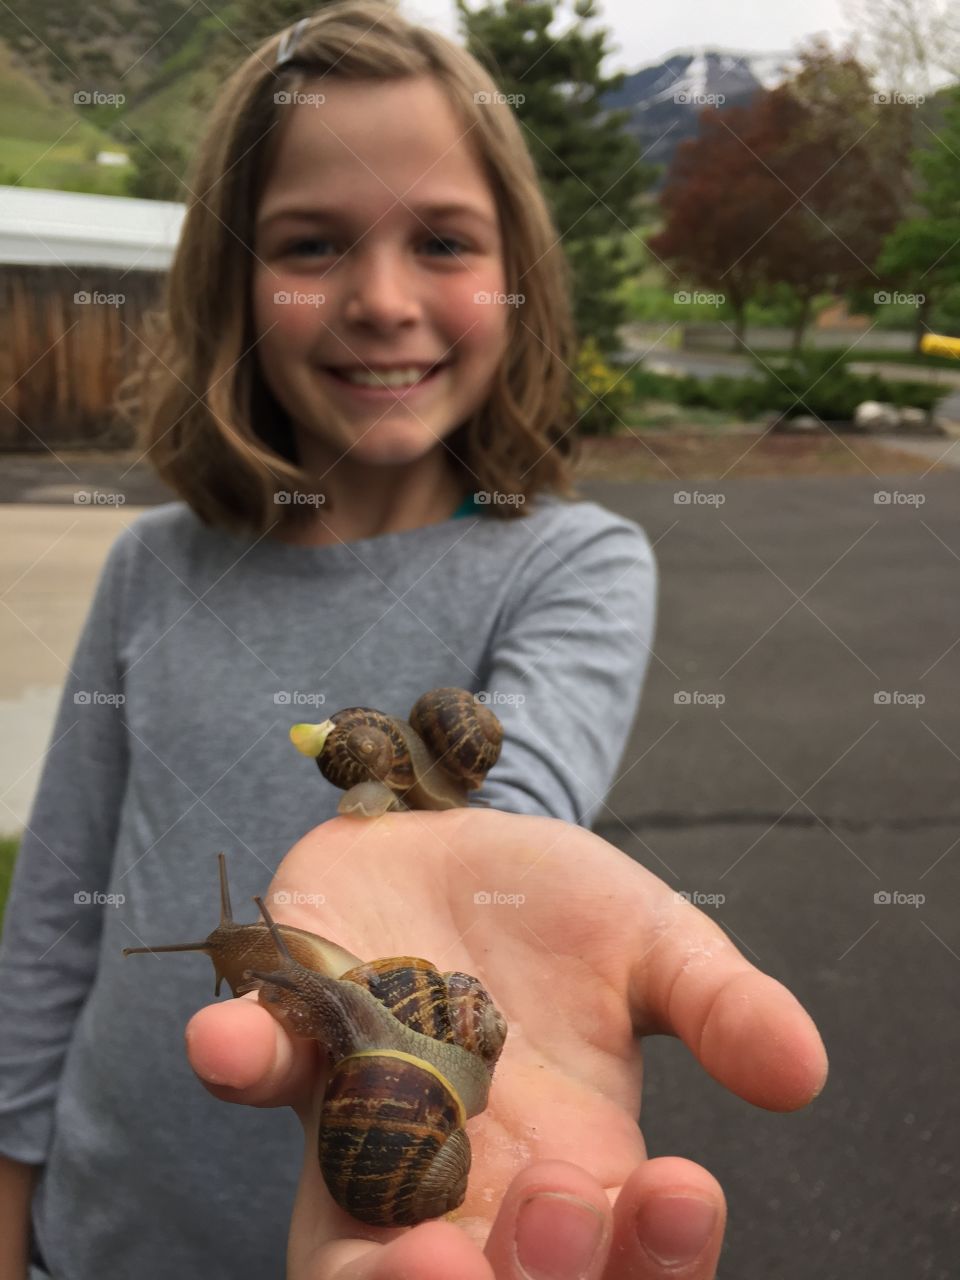 Girls love snails